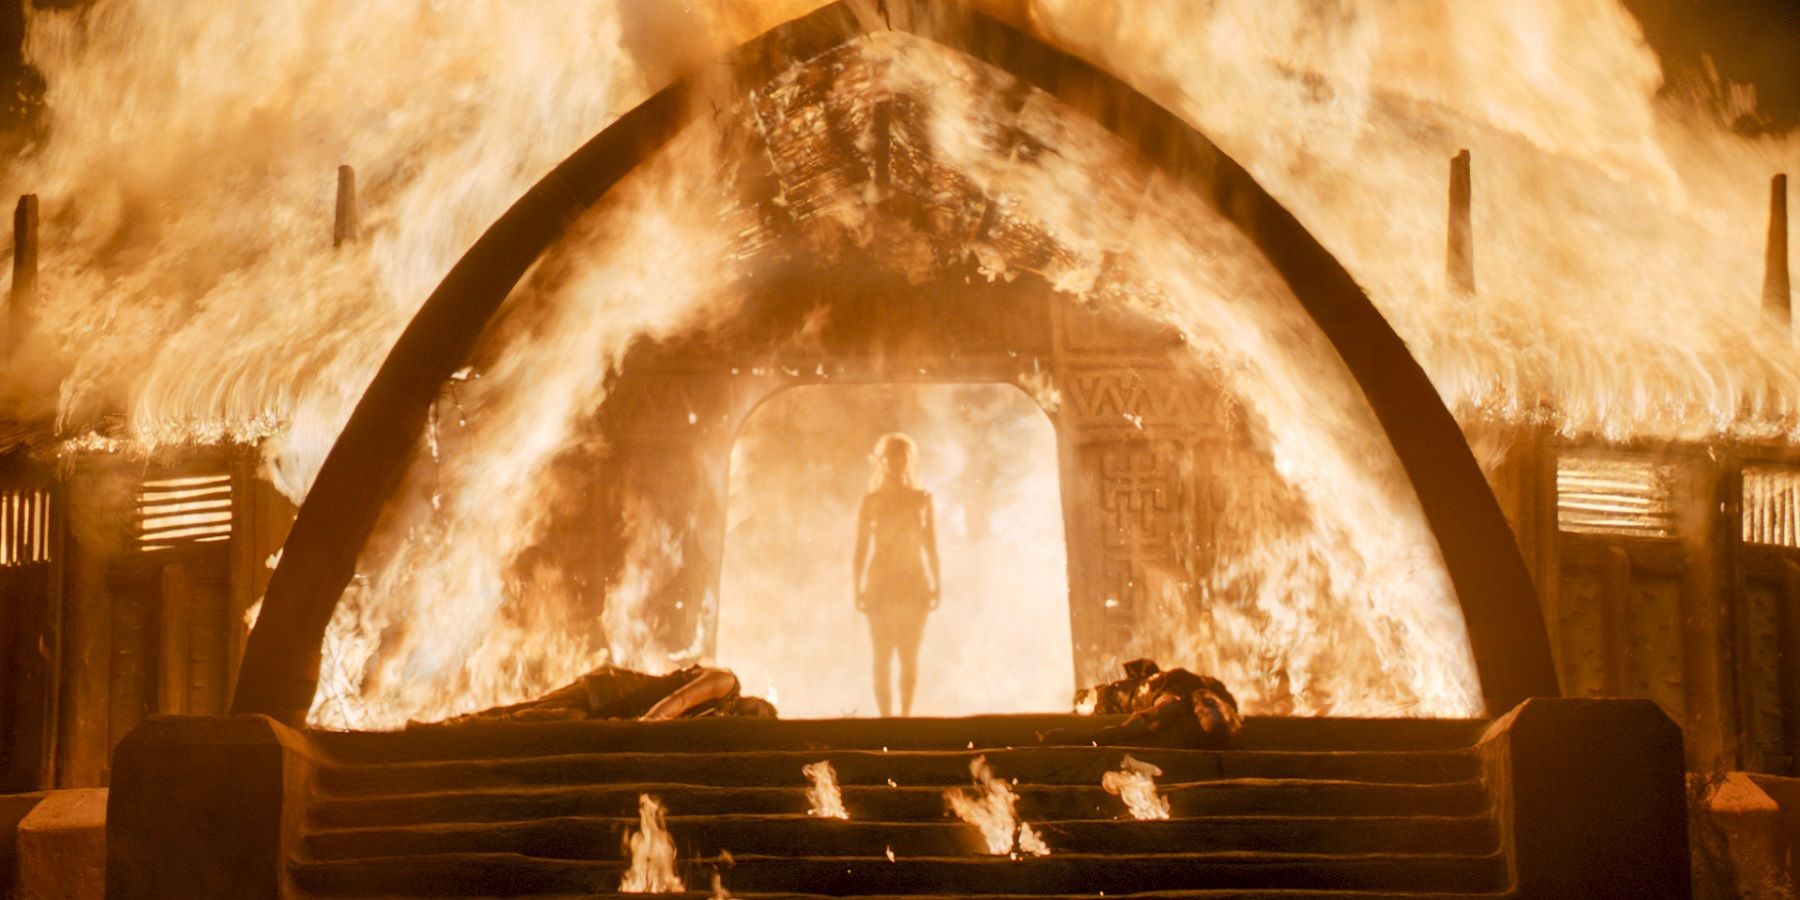 Game of Thrones - Daenerys Targaryen in the flames